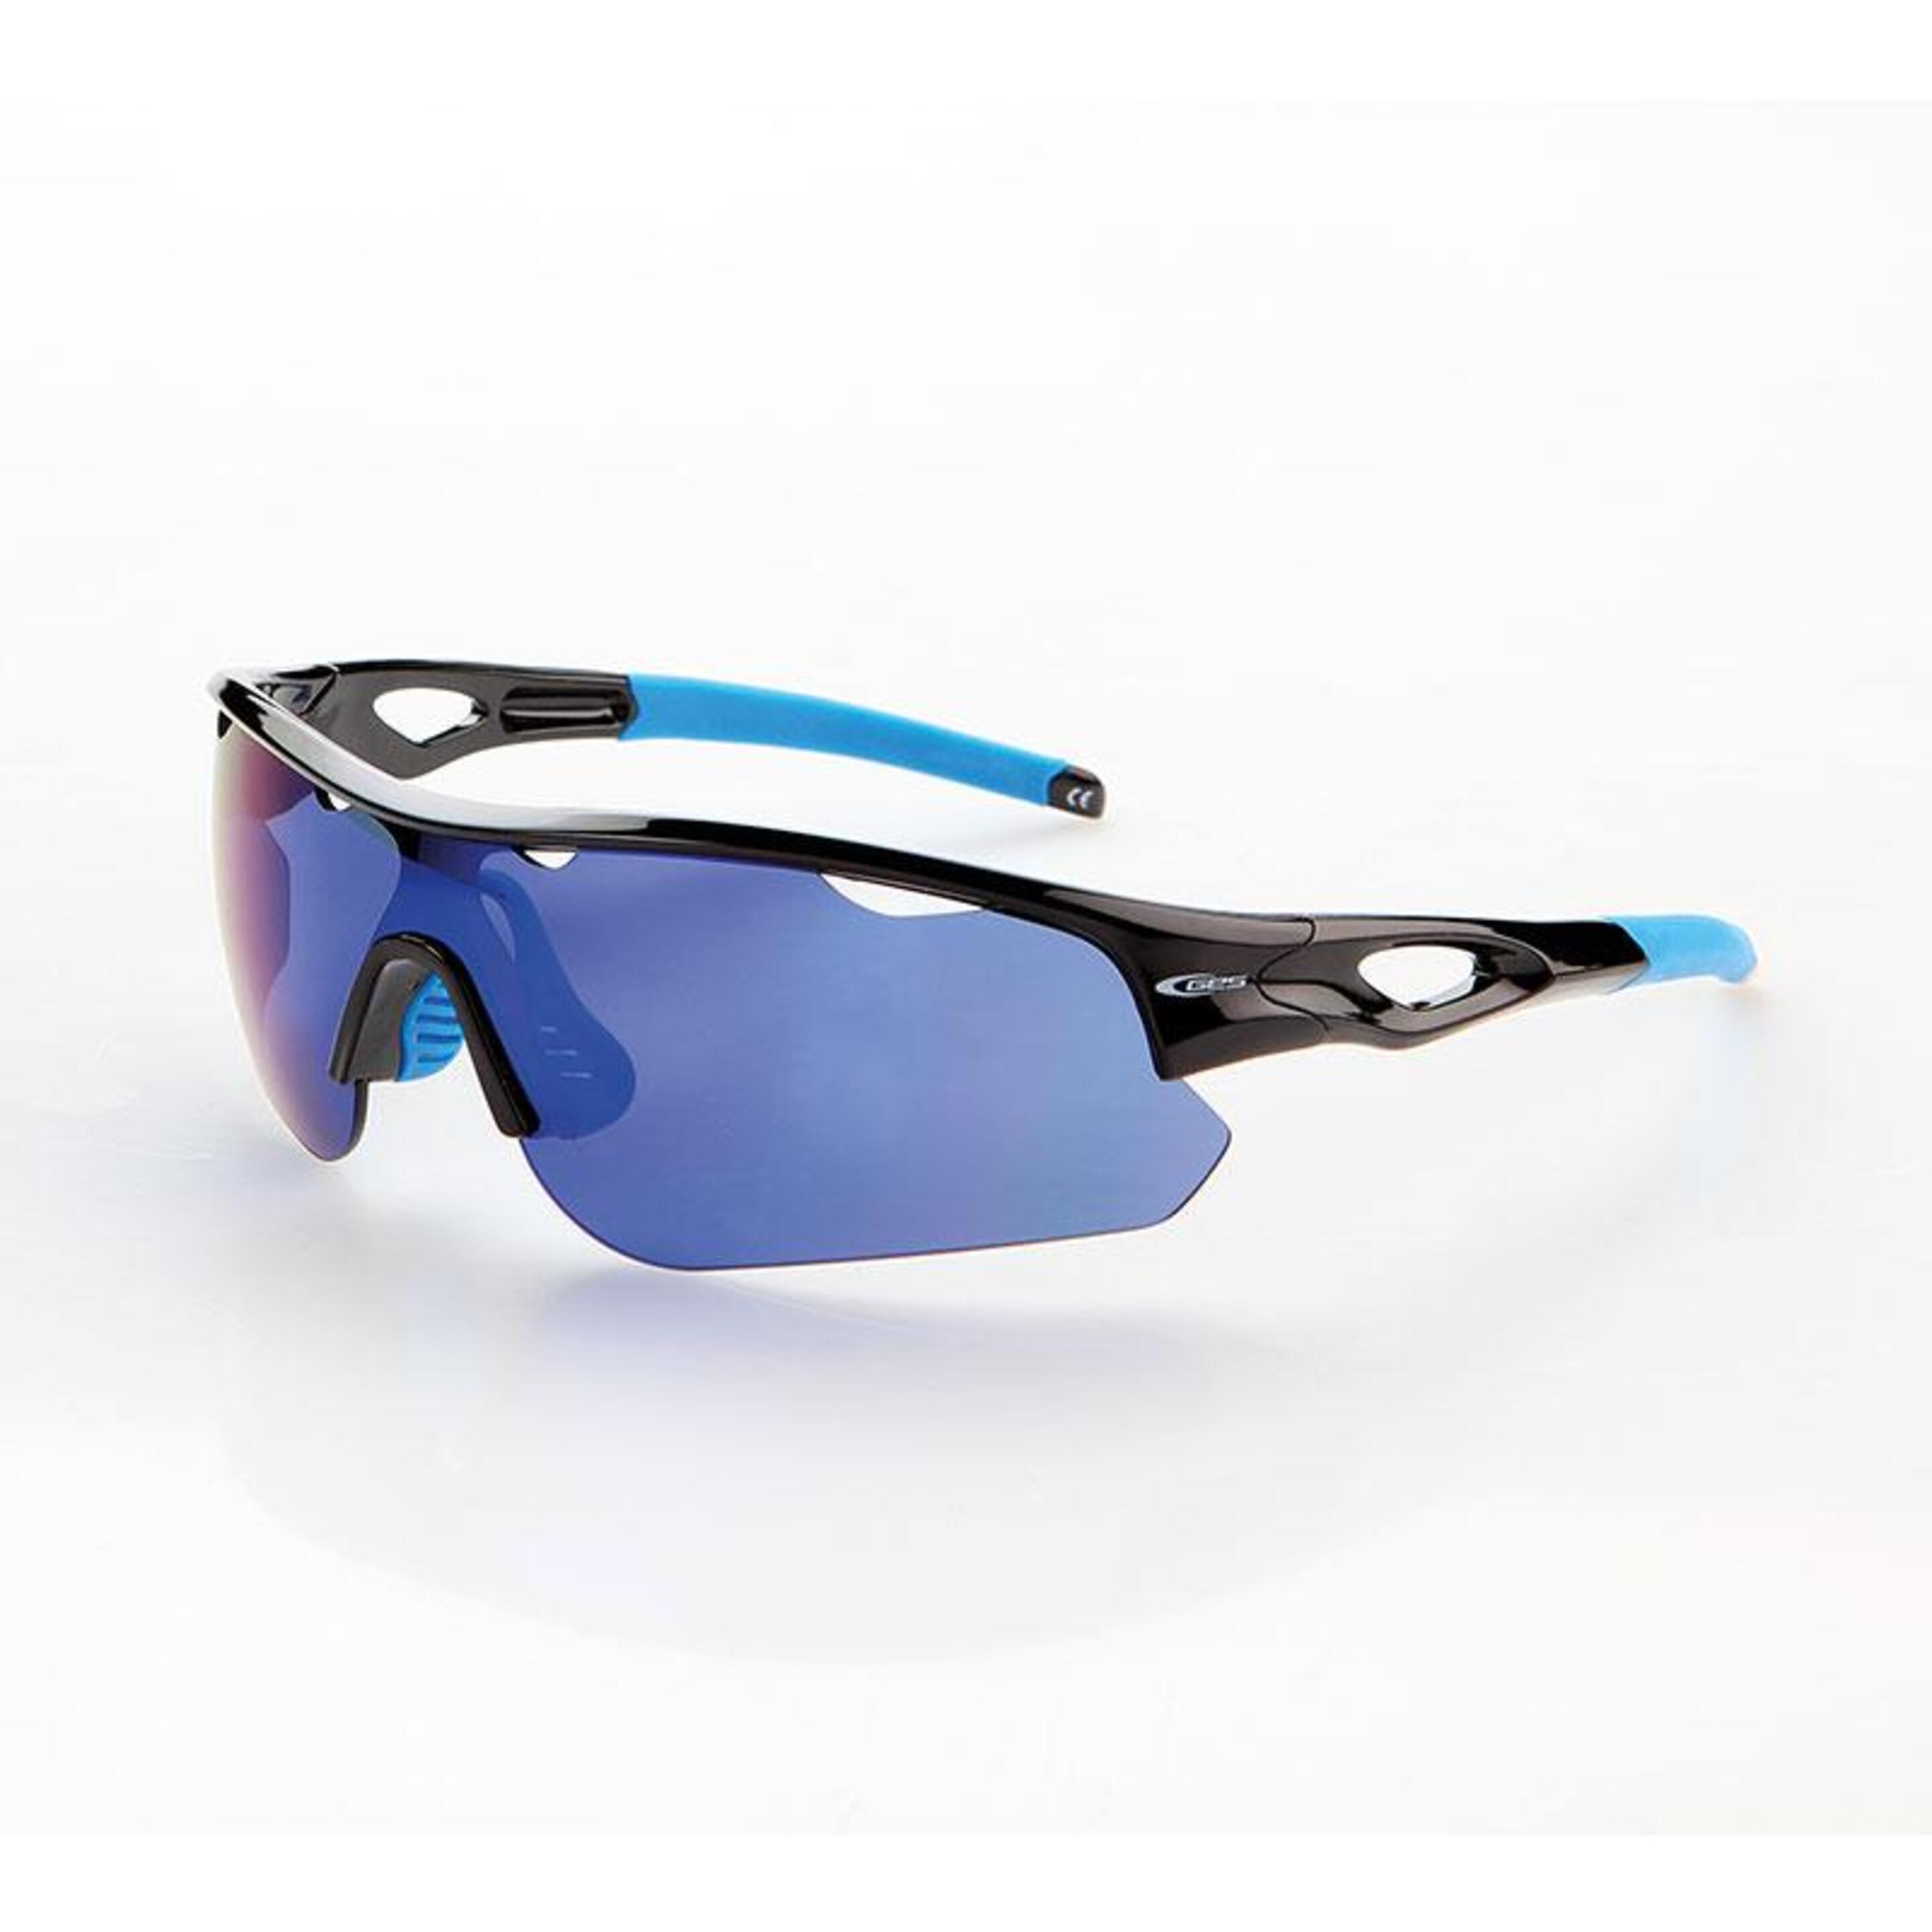 Gafas Ges 3 Lentes - negro-azul - 